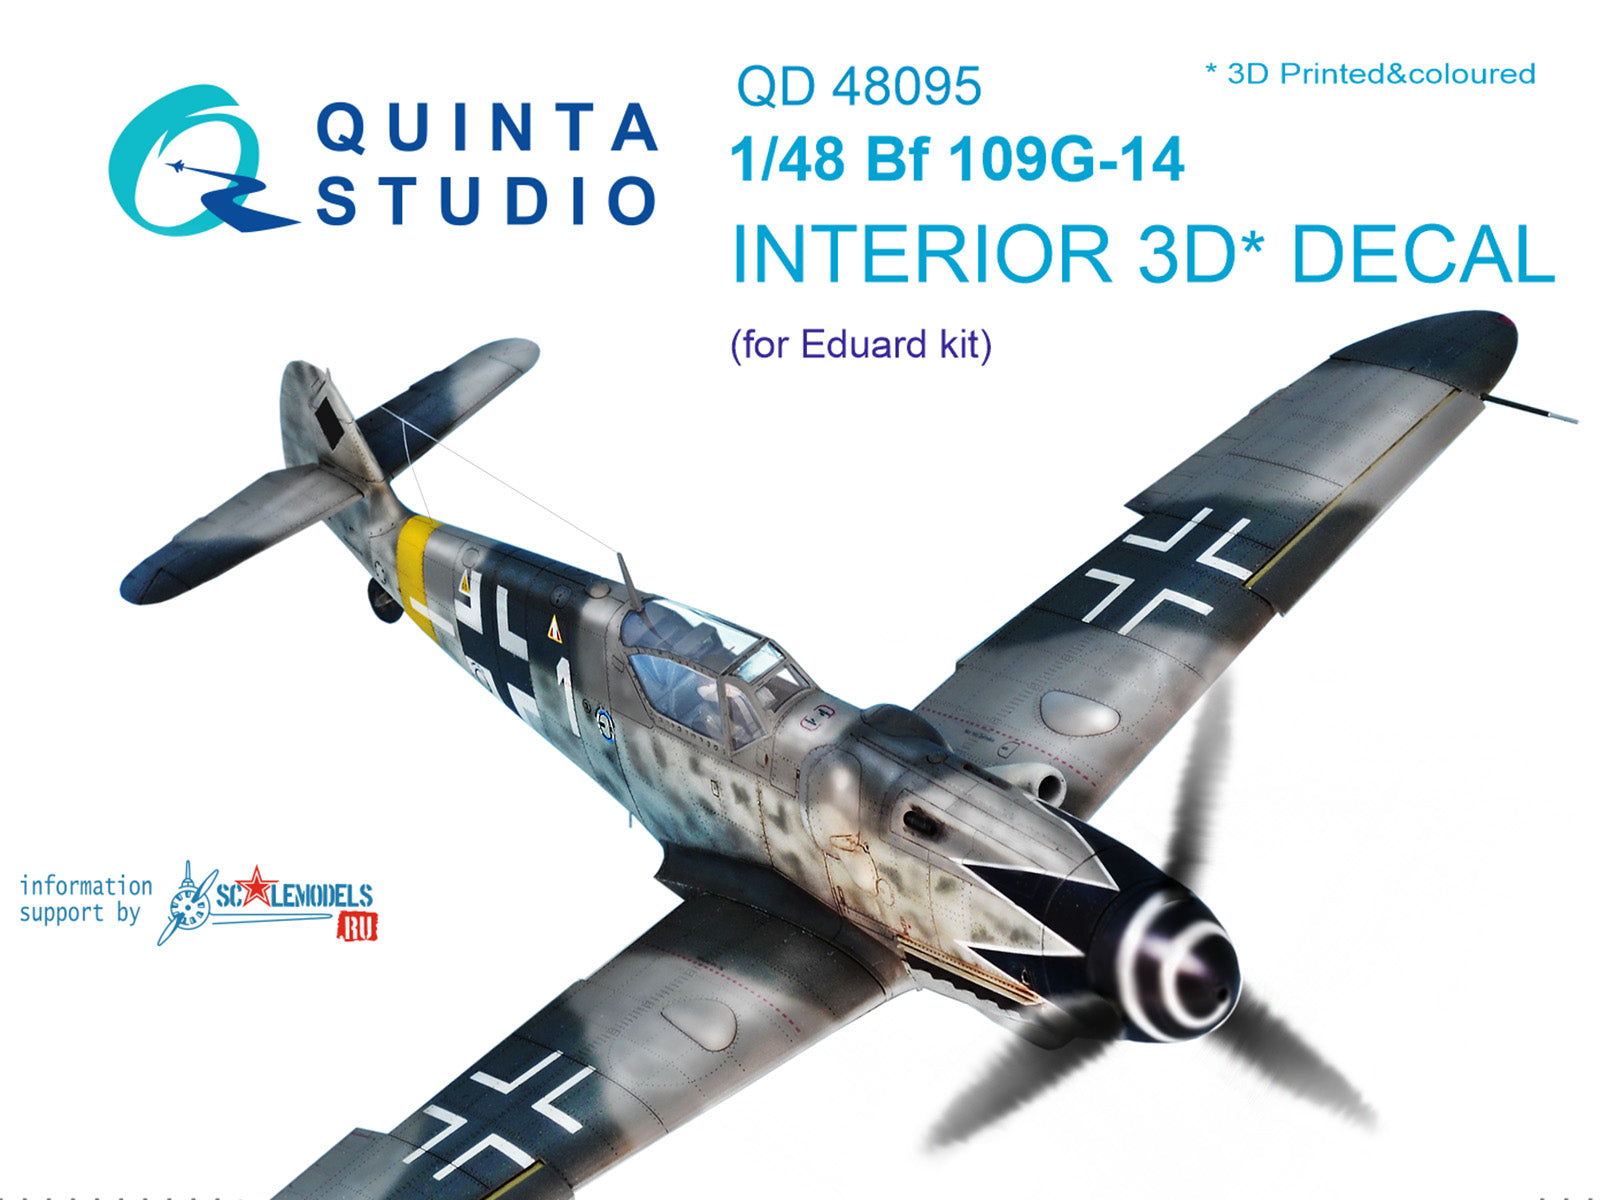 Quinta Studio - 1/48 Bf 109G-14 QD48095 for Eduard kit